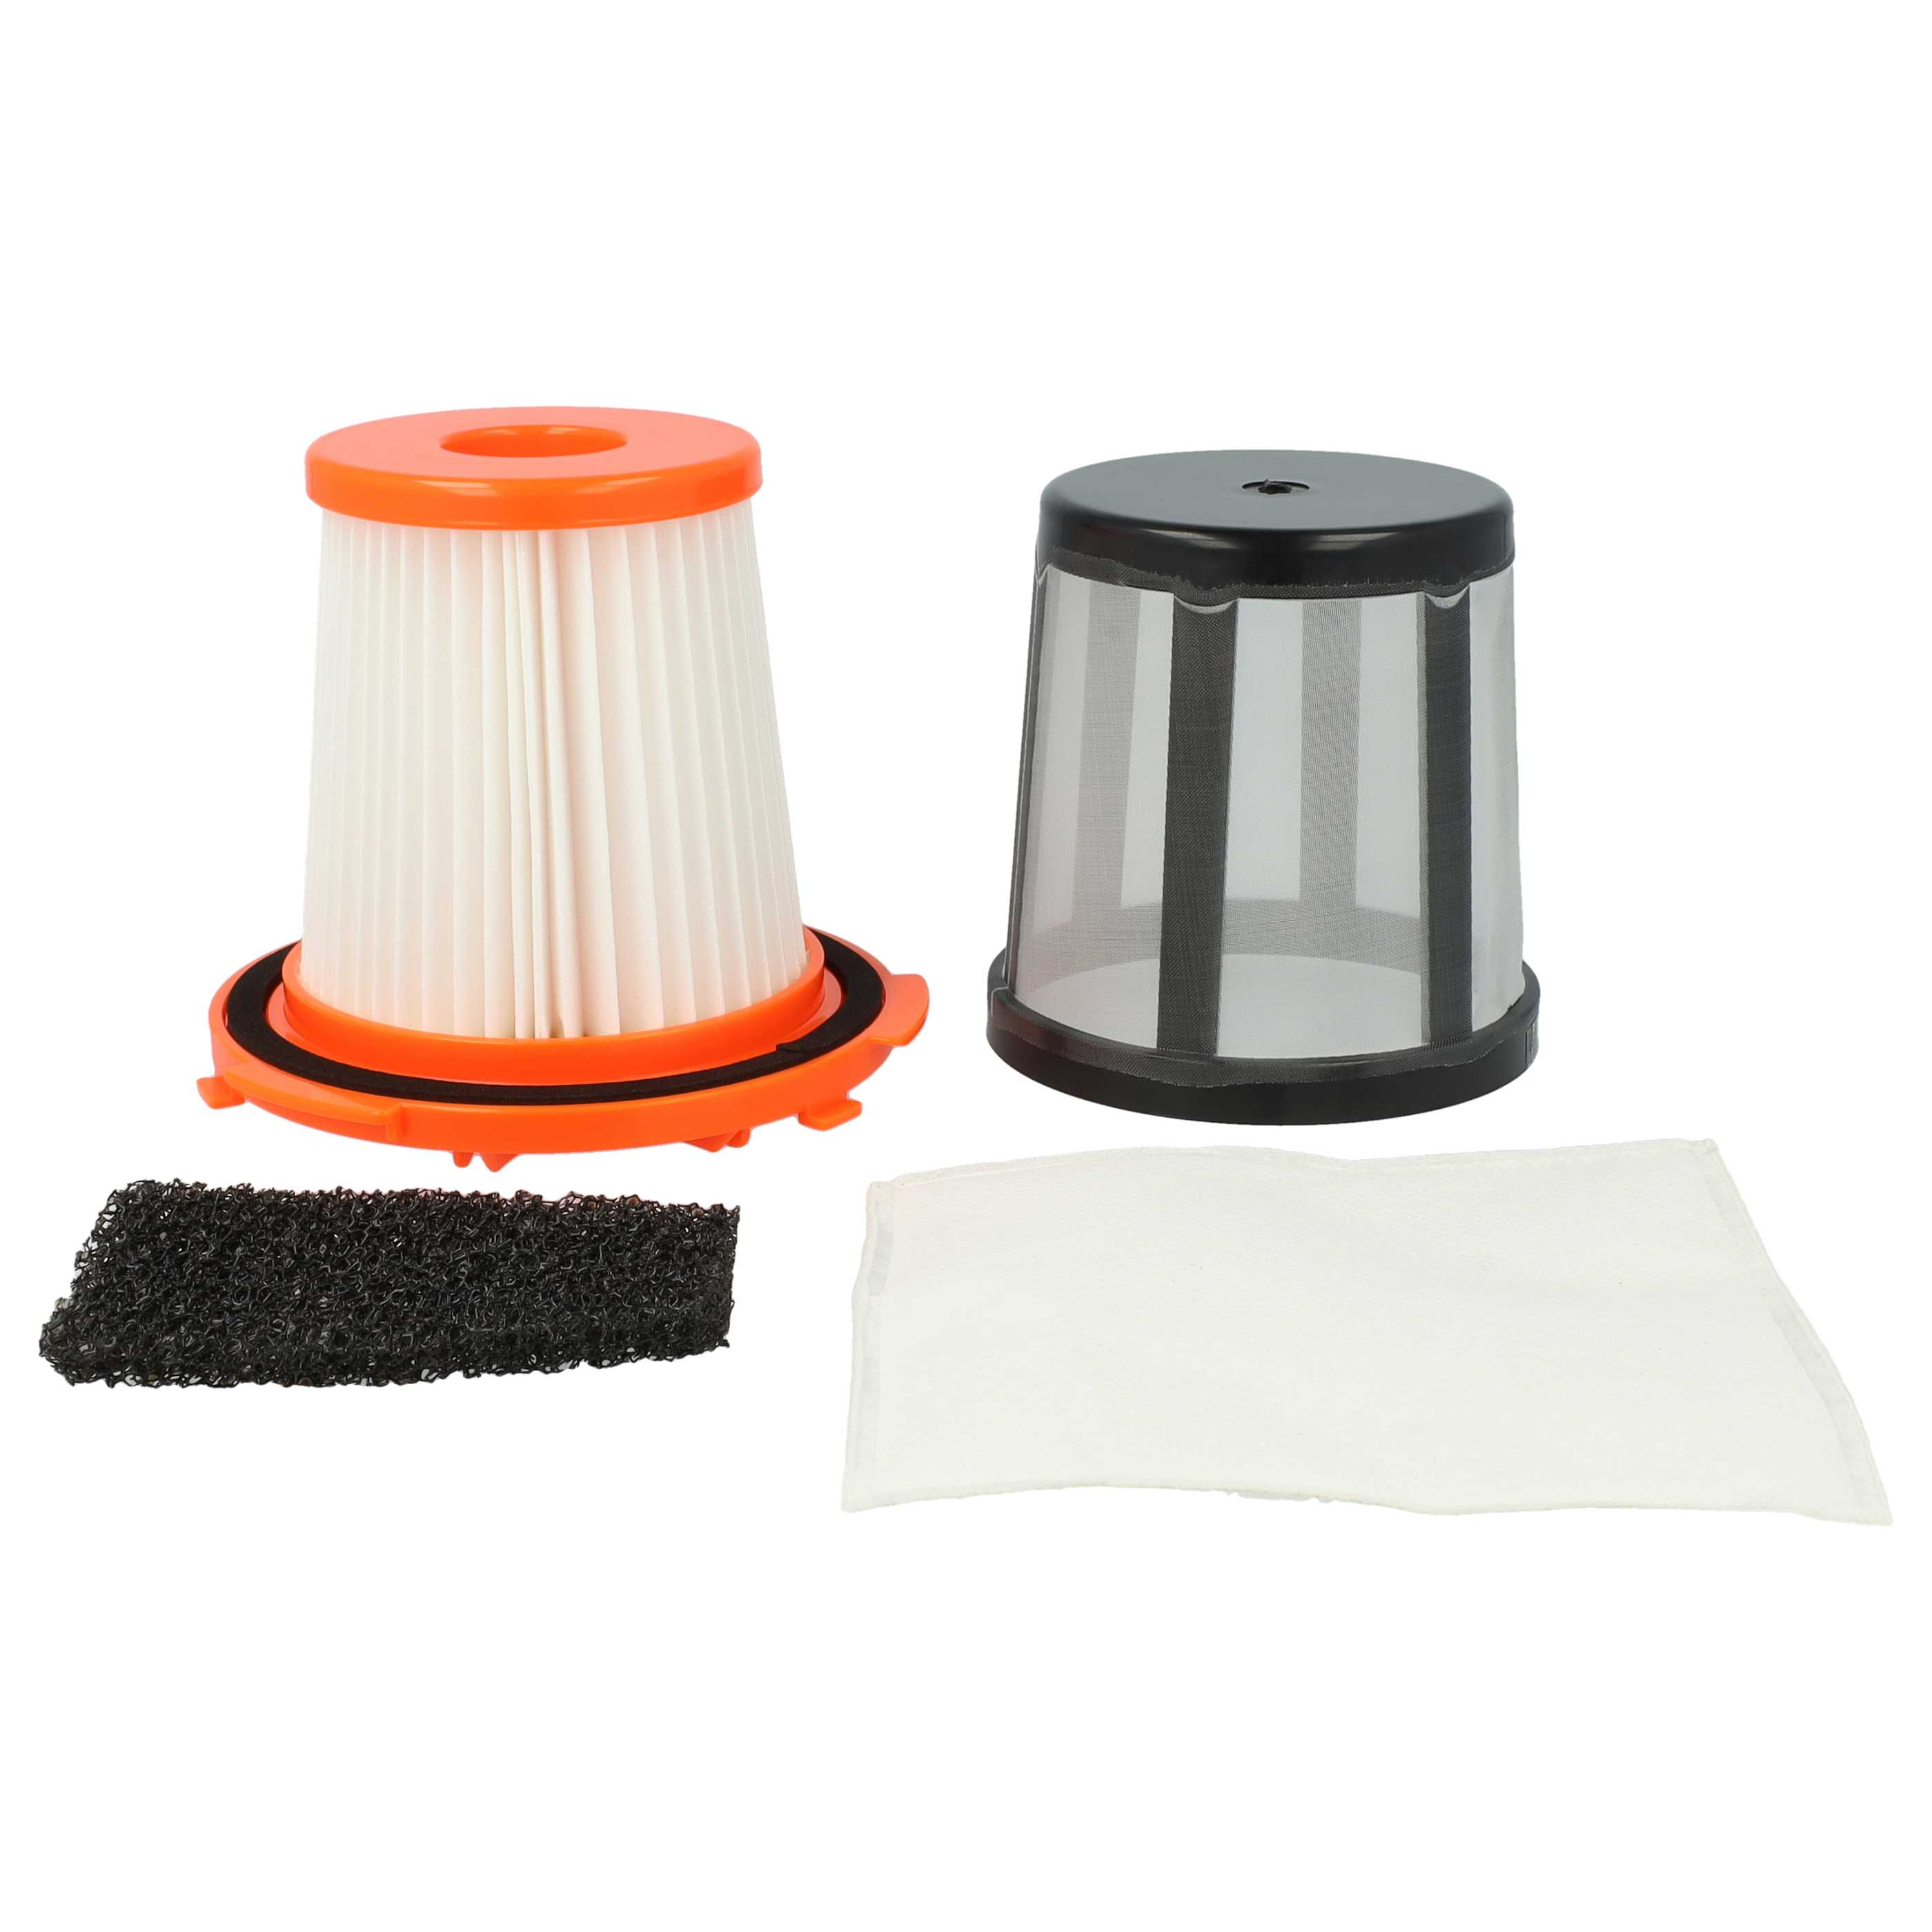 3x HEPA filter / motor filter / micro-filter replaces AEG/Electrolux 4071387353 for Zanussi Vacuum Cleaner